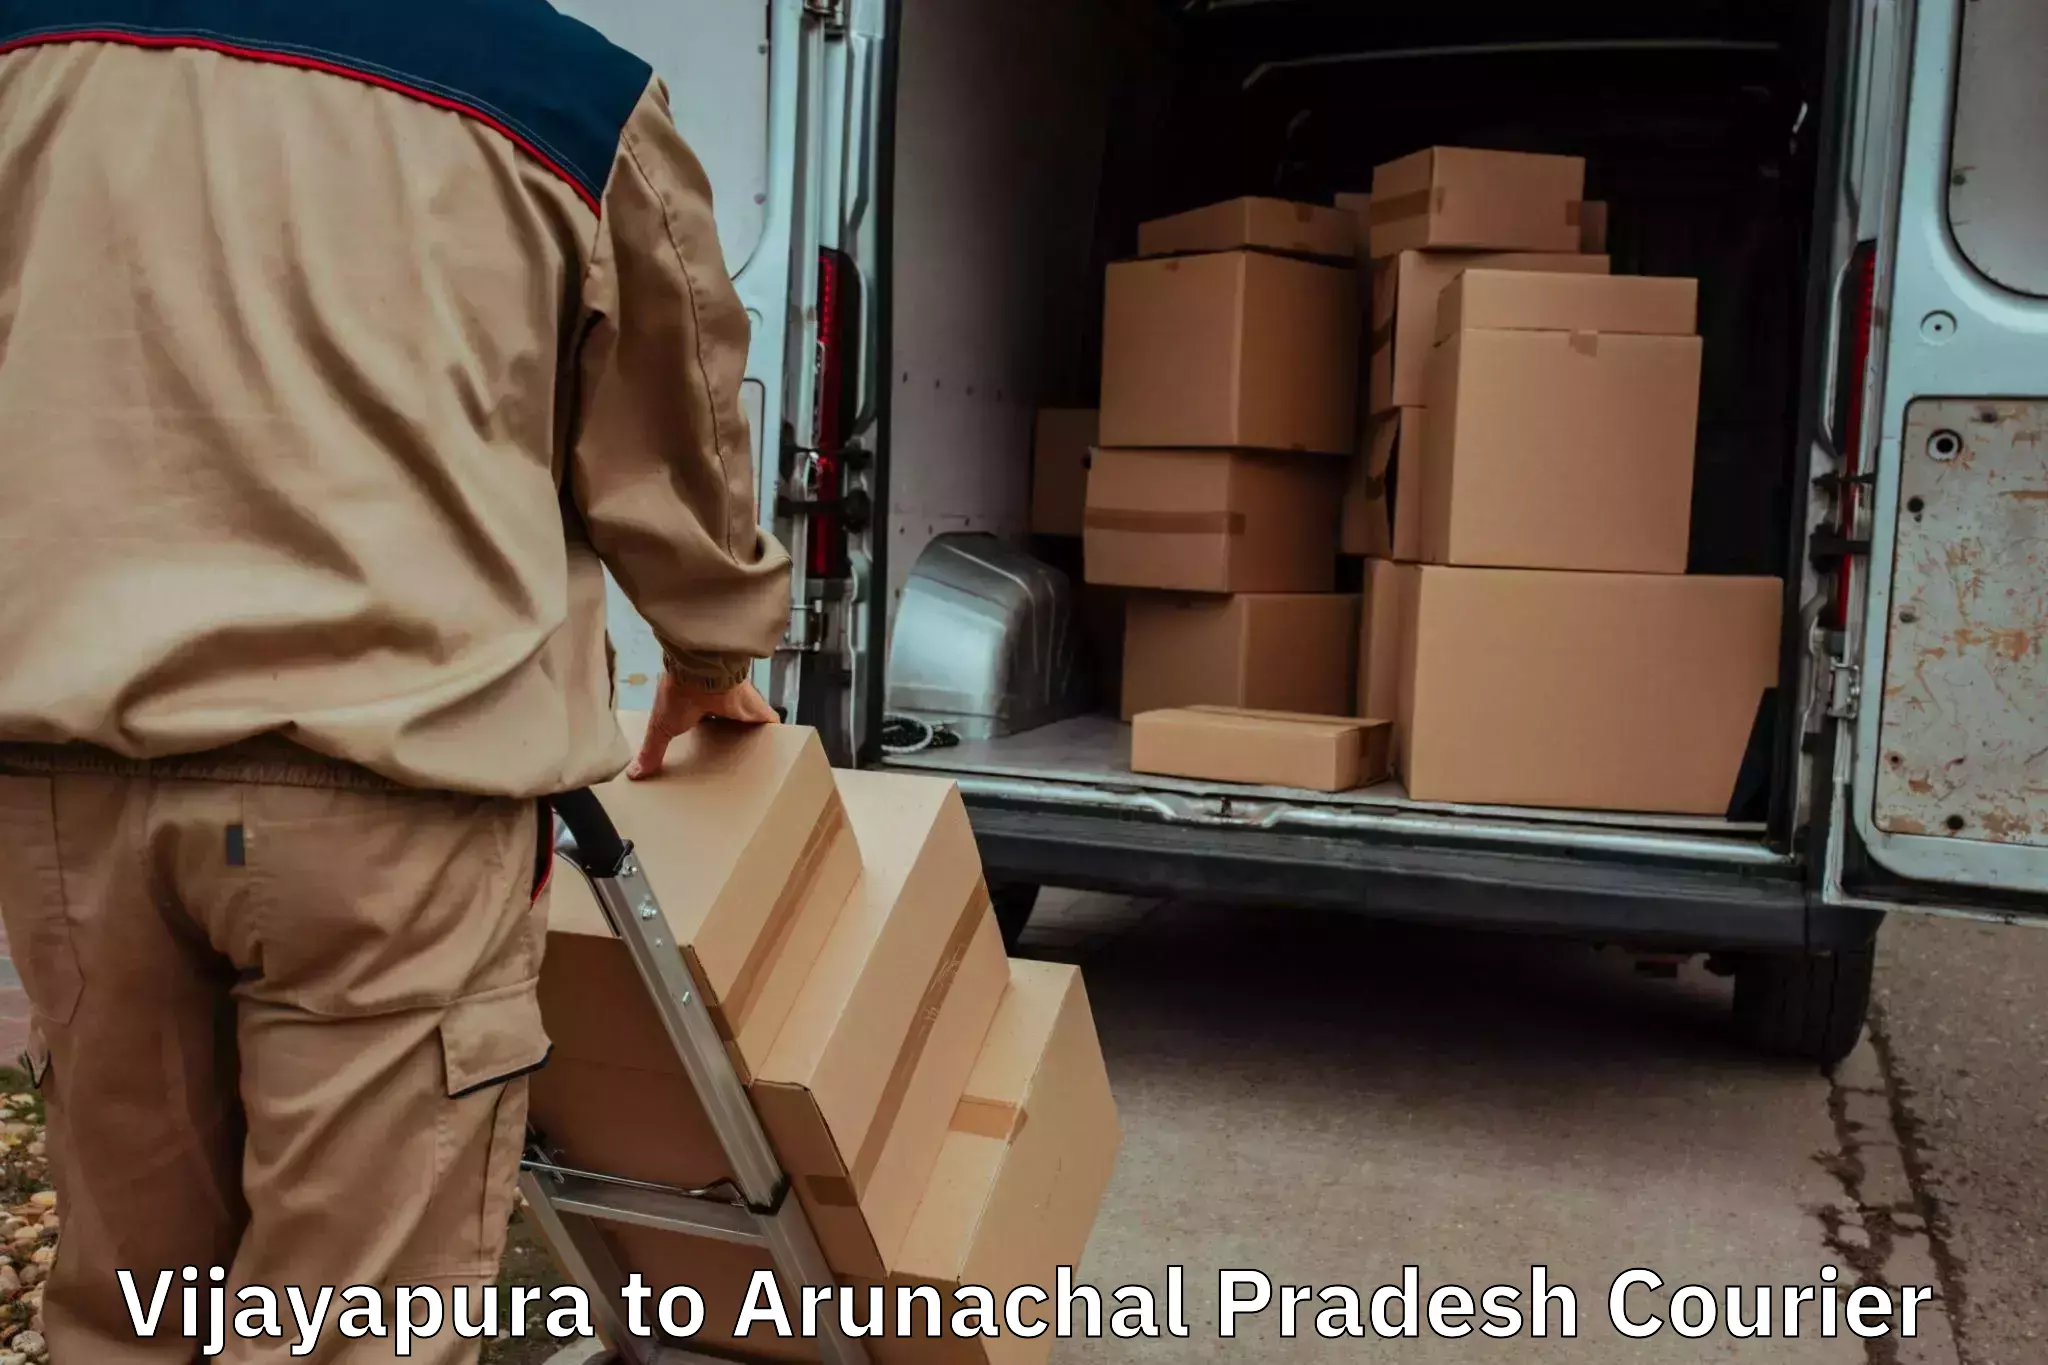 Trusted relocation experts Vijayapura to Arunachal Pradesh